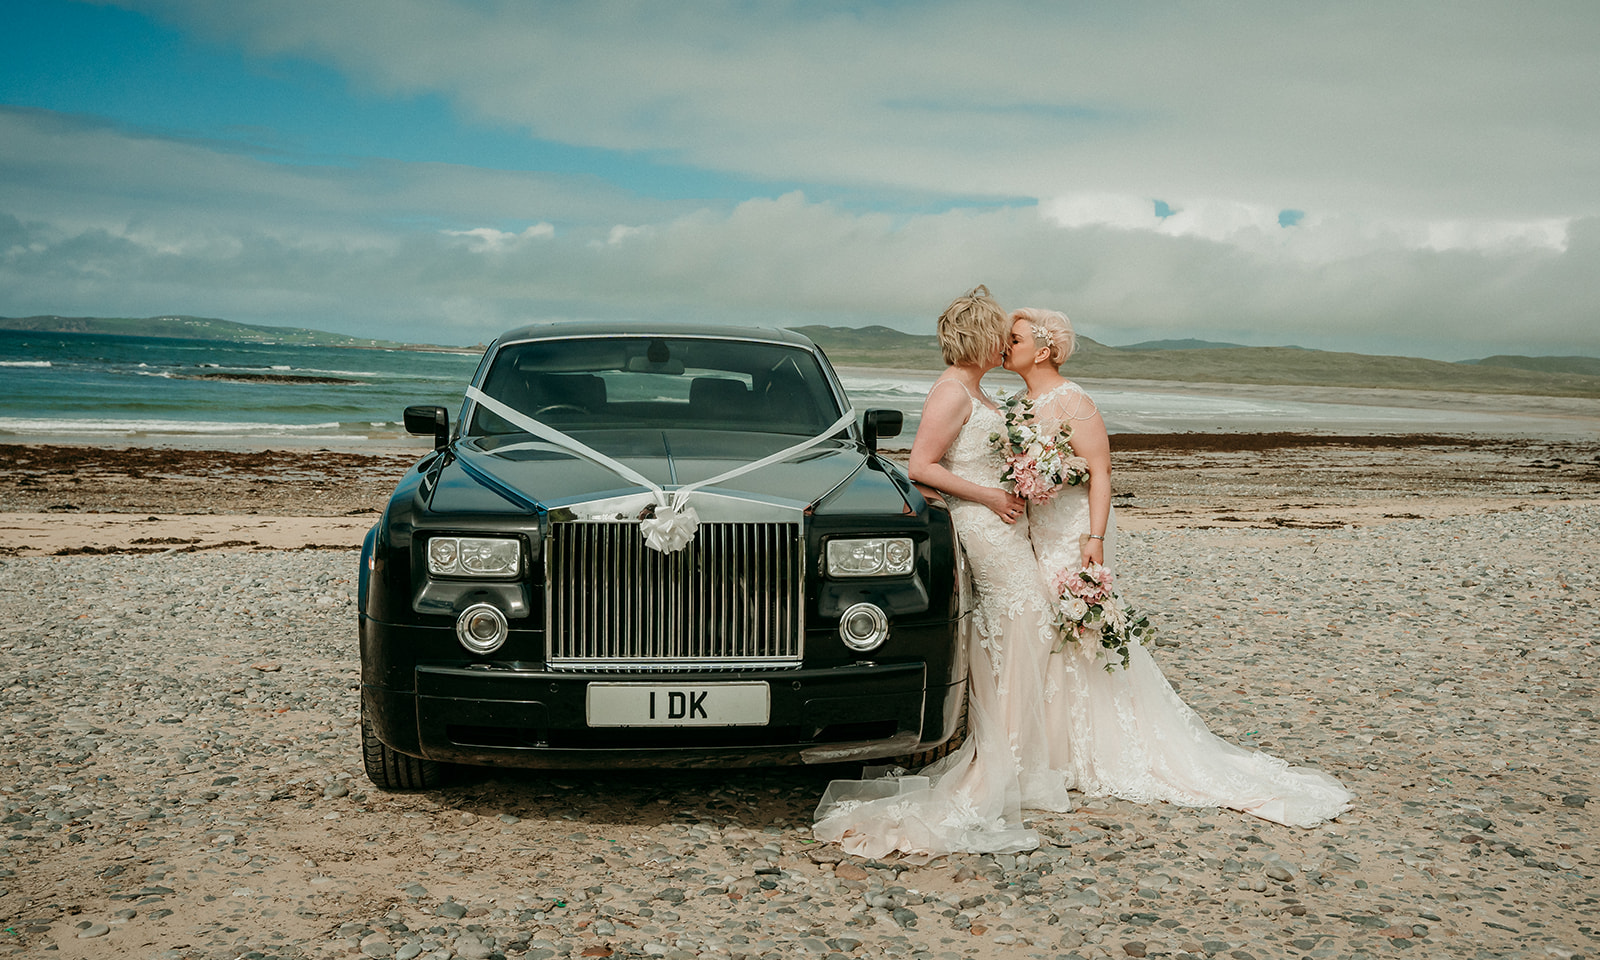 Ballyliffin Hotel and beach wedding photoshoot 